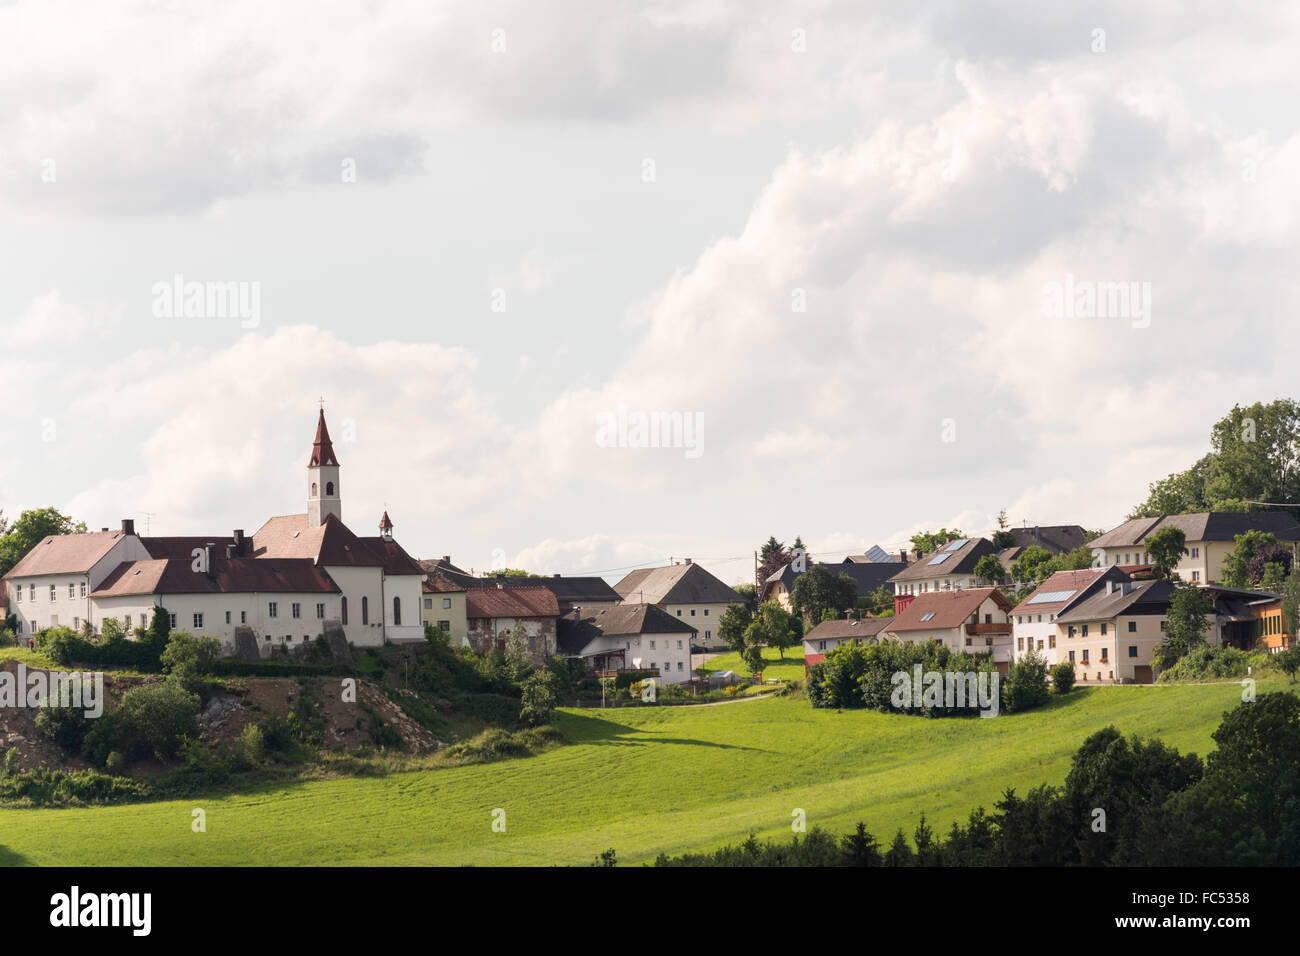 Castle Götzendorf with small rural community Stock Photo